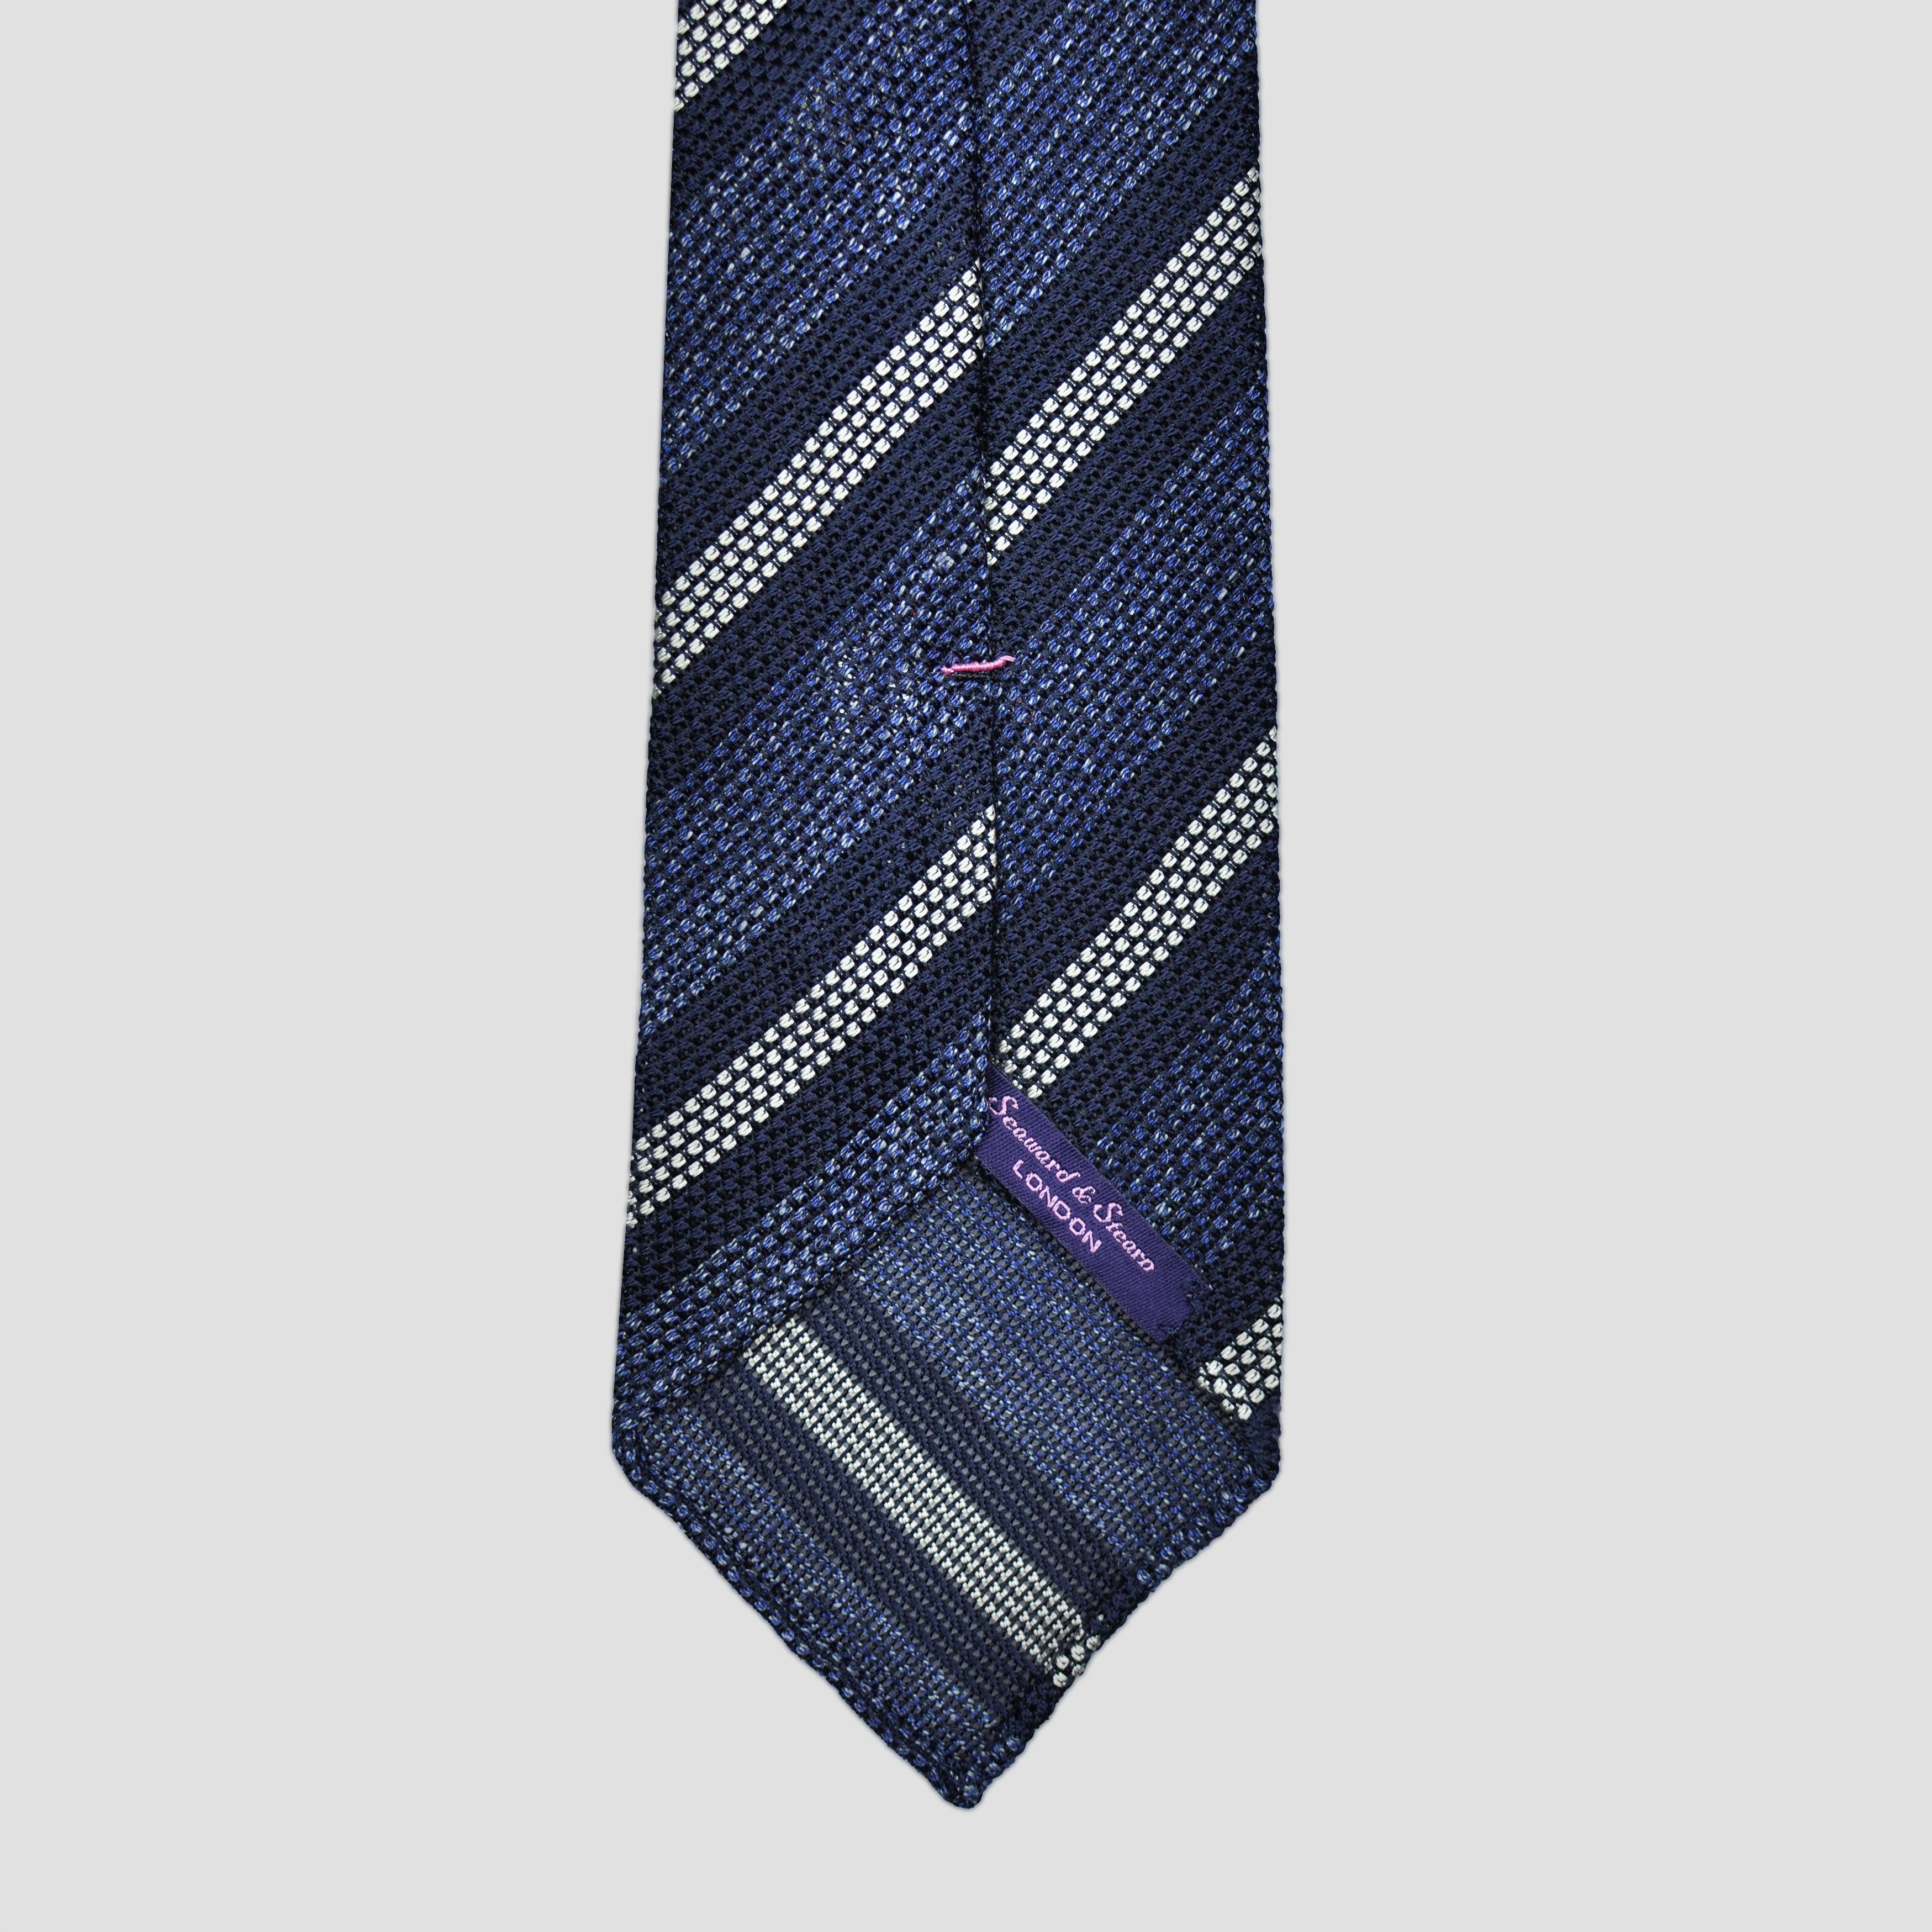 Neat Stripes Handrolled Grenadine Silk Tie in Mottled Blue, Navy & Grey